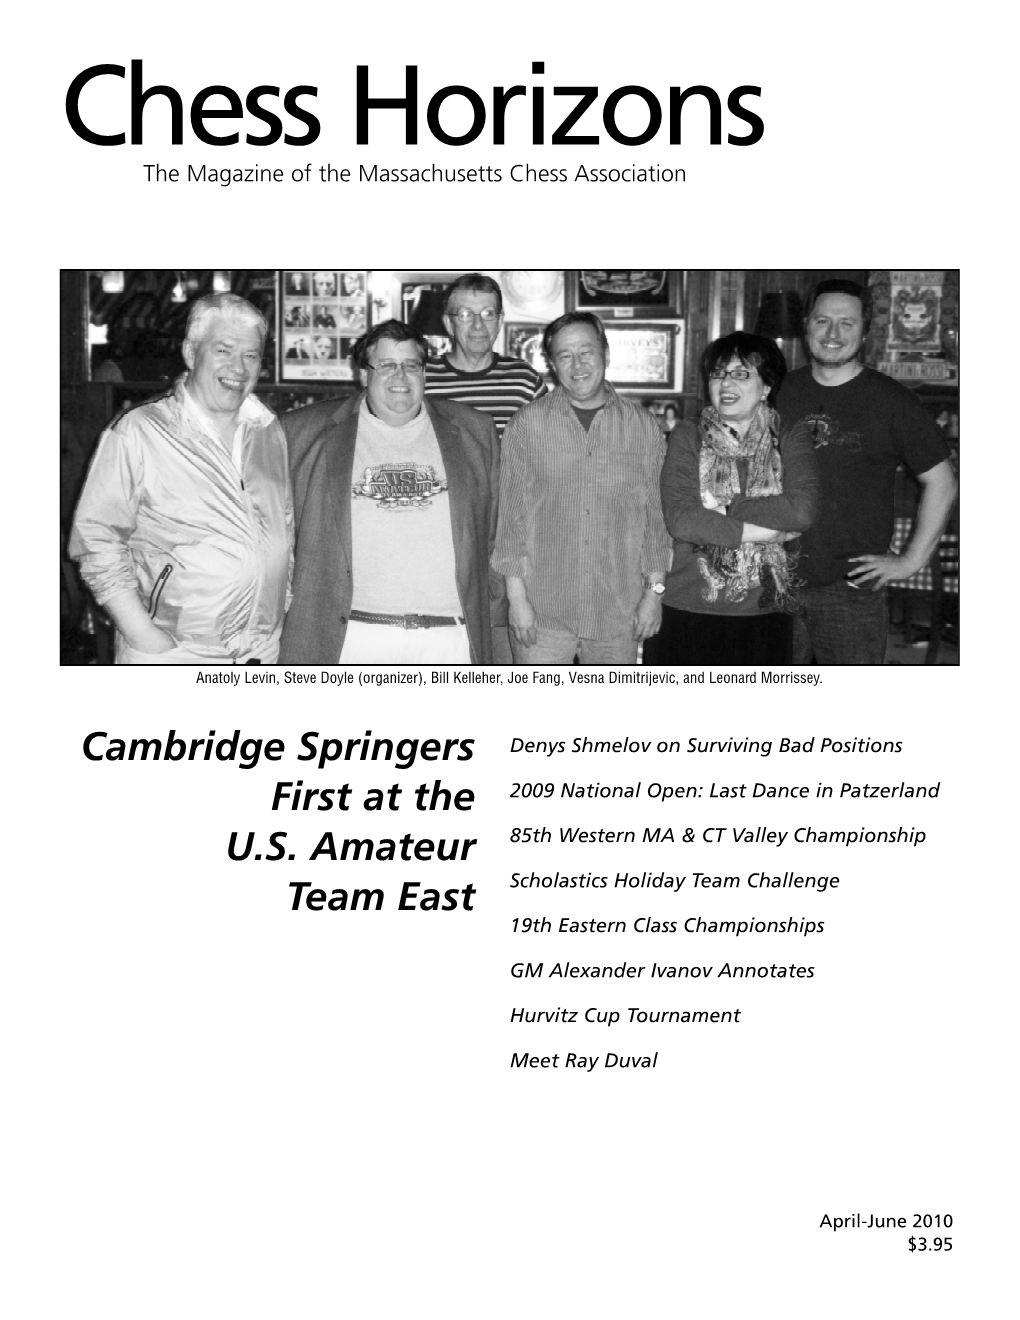 Chess Horizons the Magazine of the Massachusetts Chess Association